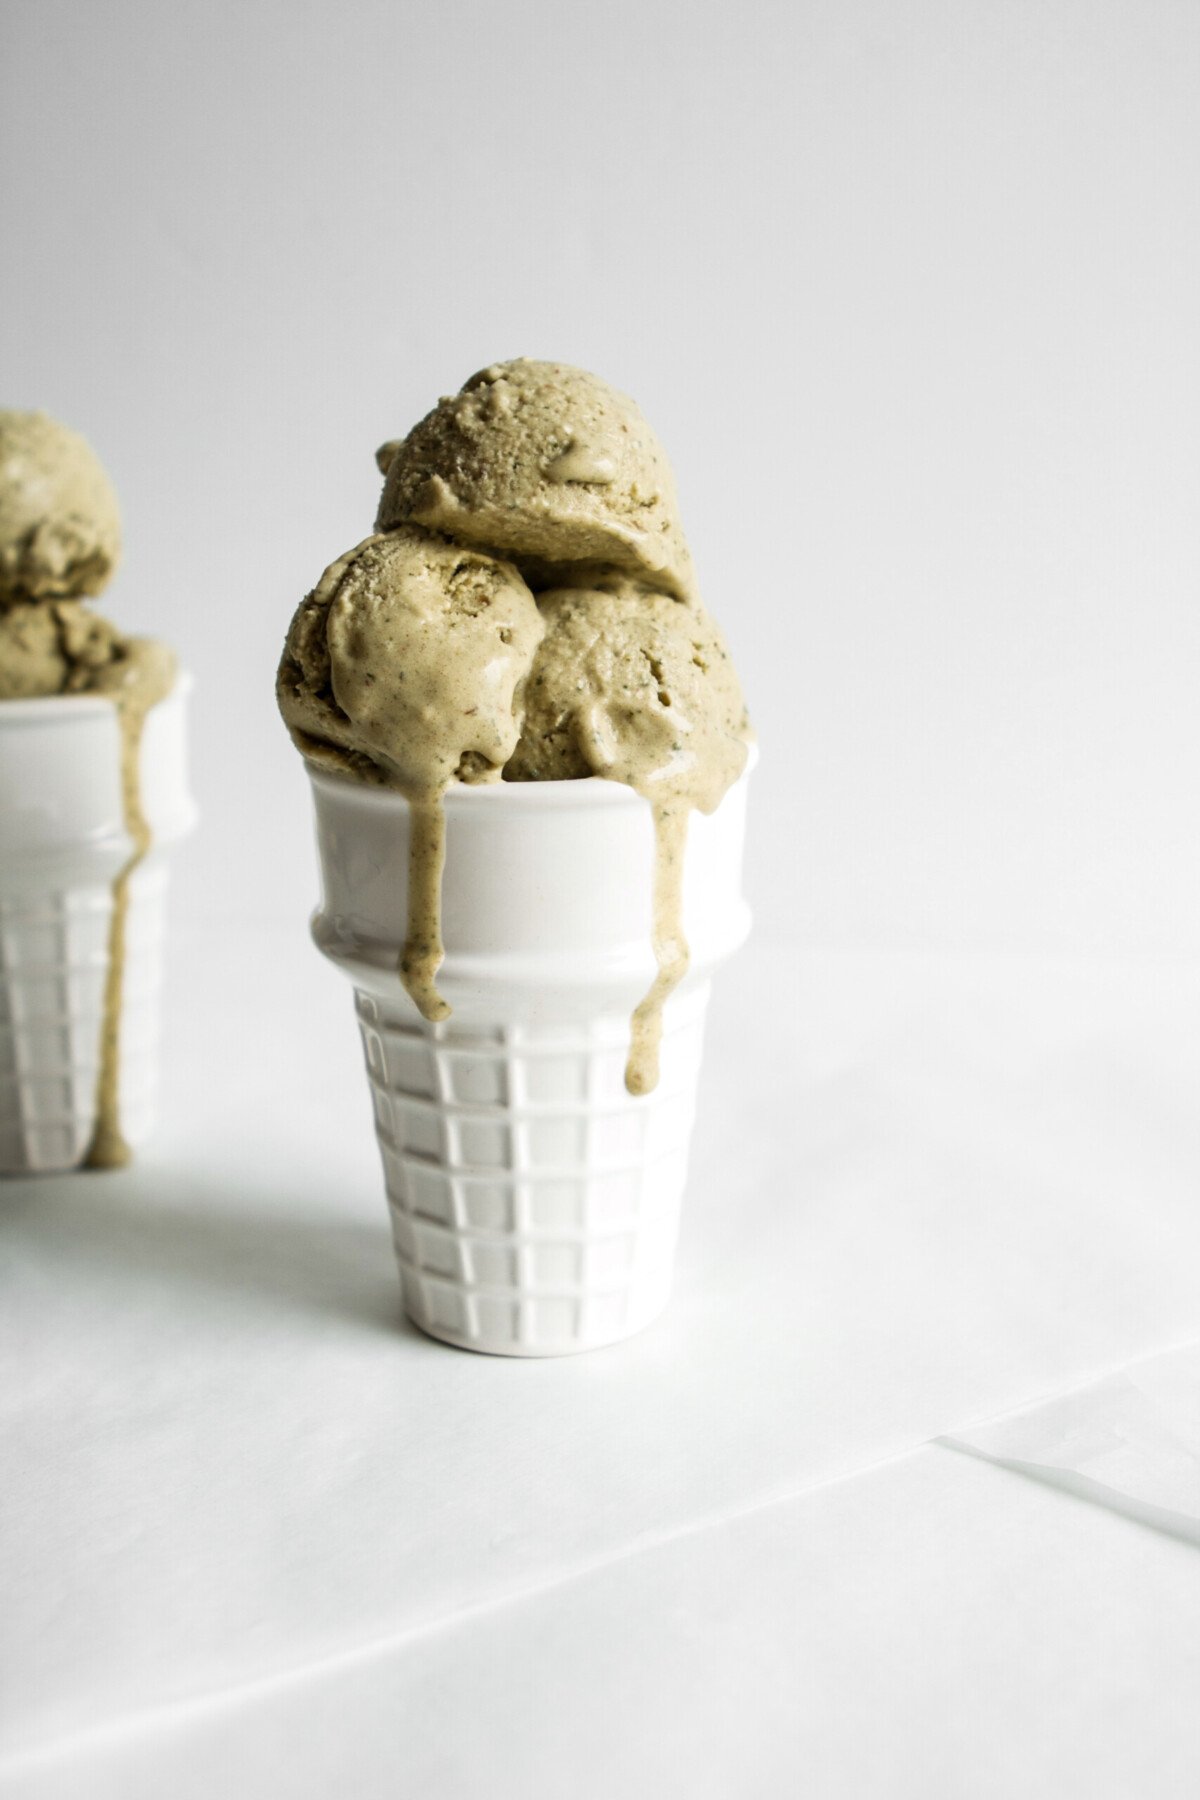 Vegan mint ice cream in a white glass cone